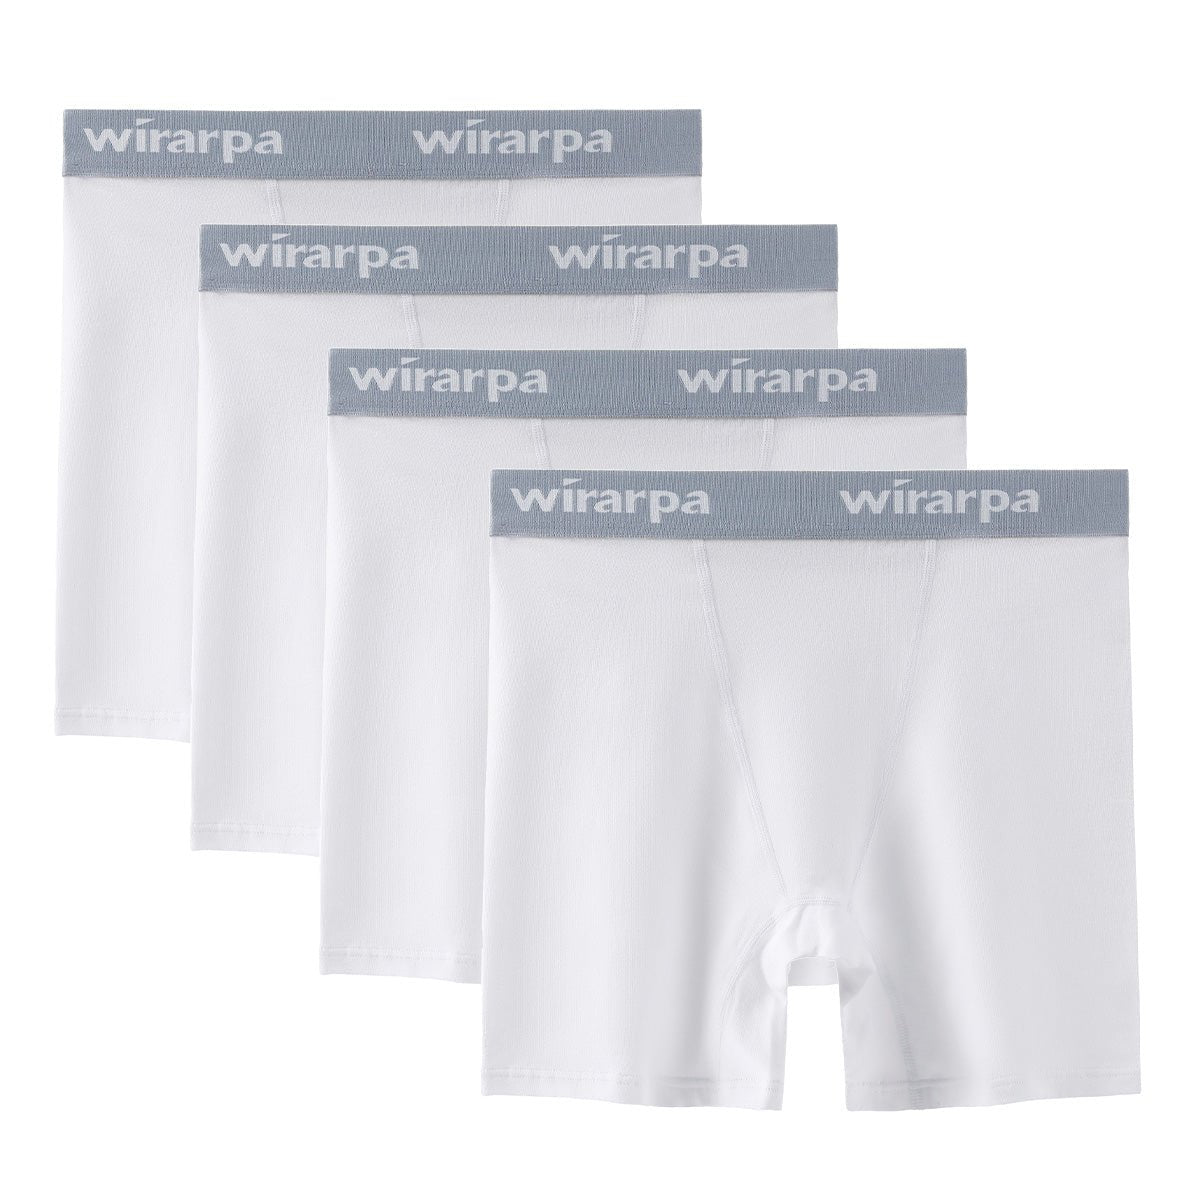 Wirarpa Women's Cotton Anti Chafing Boy Shorts Panties 5.5 Inseam